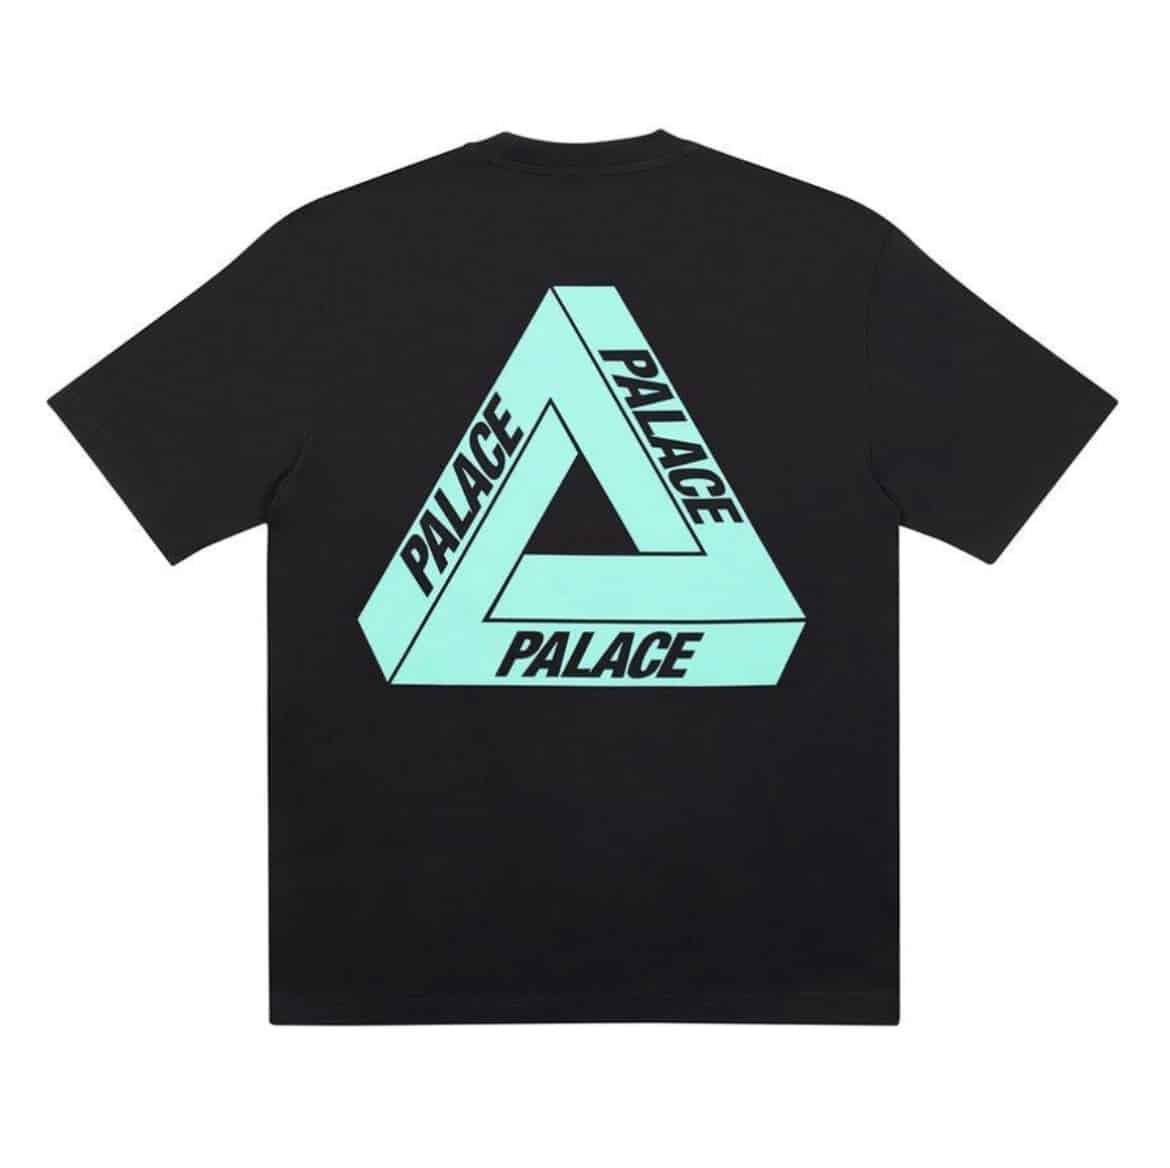 Palace Tri-To-Help T-Shirt Black/Teal Palace